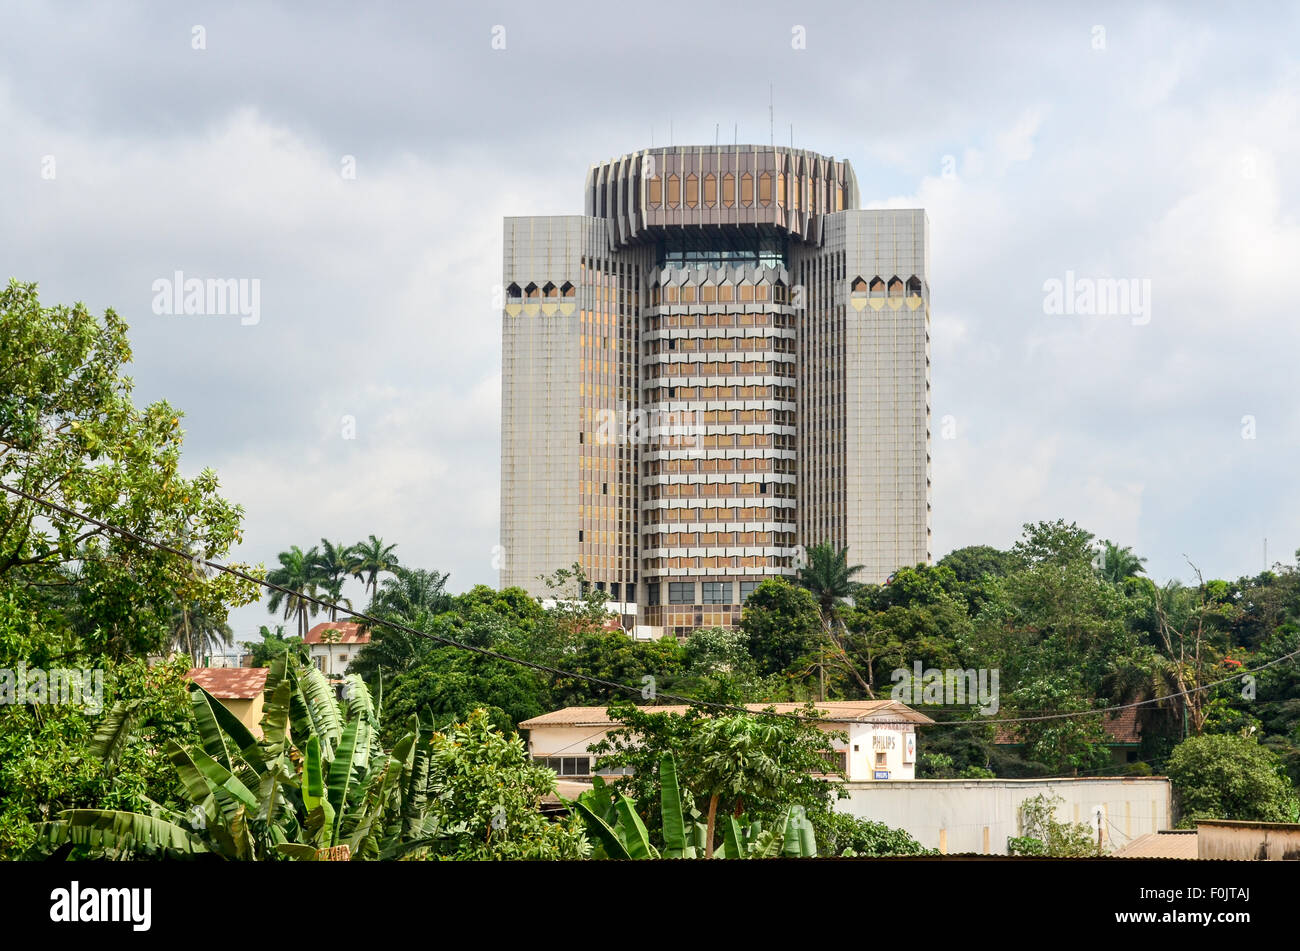 Headquarters of the BEAC (Banque des Etats de l'Afrique Centrale), Bank of Central African States, in Yaoundé, Cameroon Stock Photo